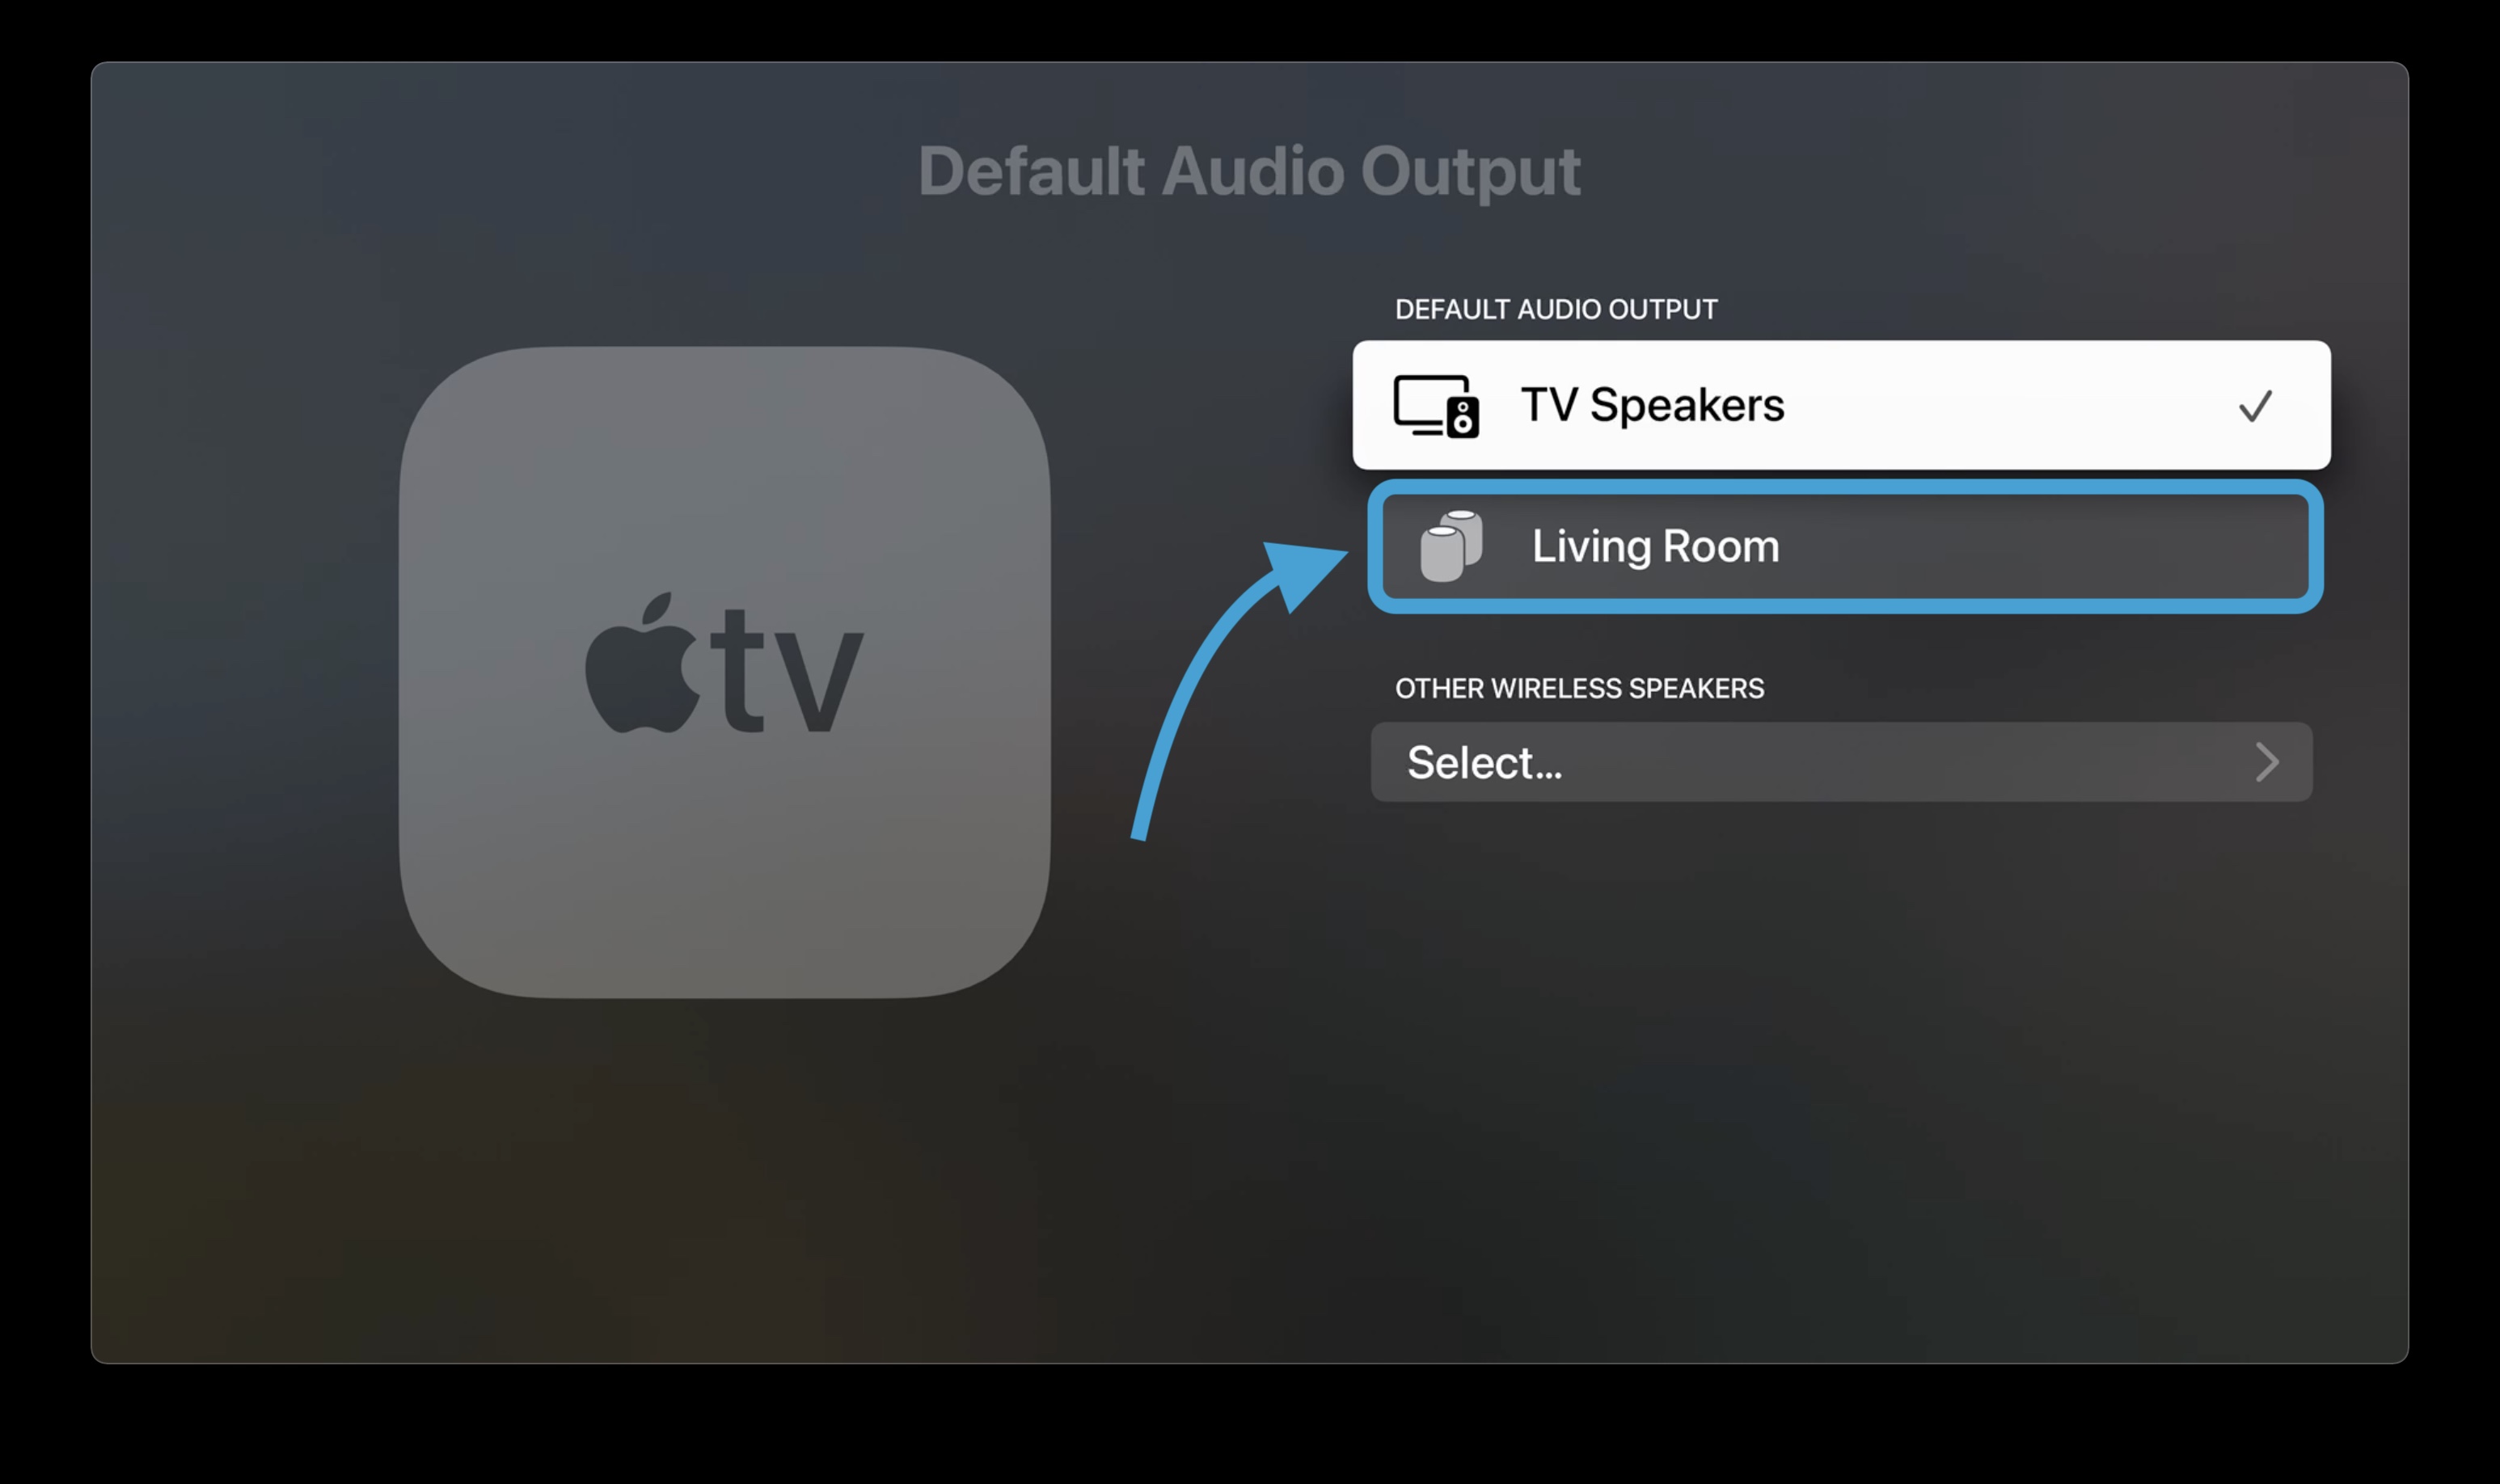 Choose the HomePod(s) that appear below "TV Speakers"